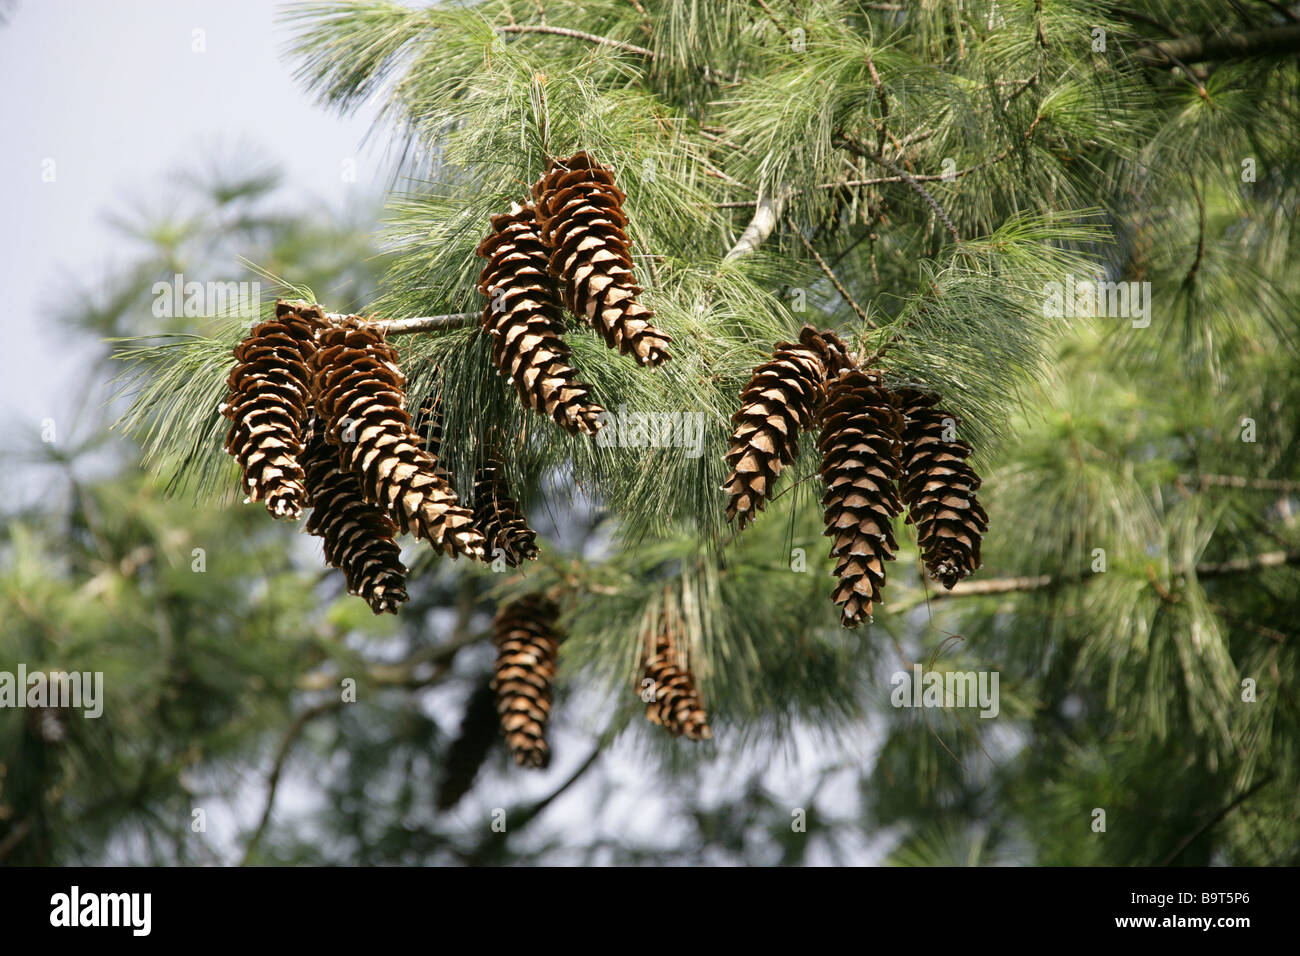 Mexican White Pine, Pinus ayacahuite, Pinaceae, Mexico Stock Photo